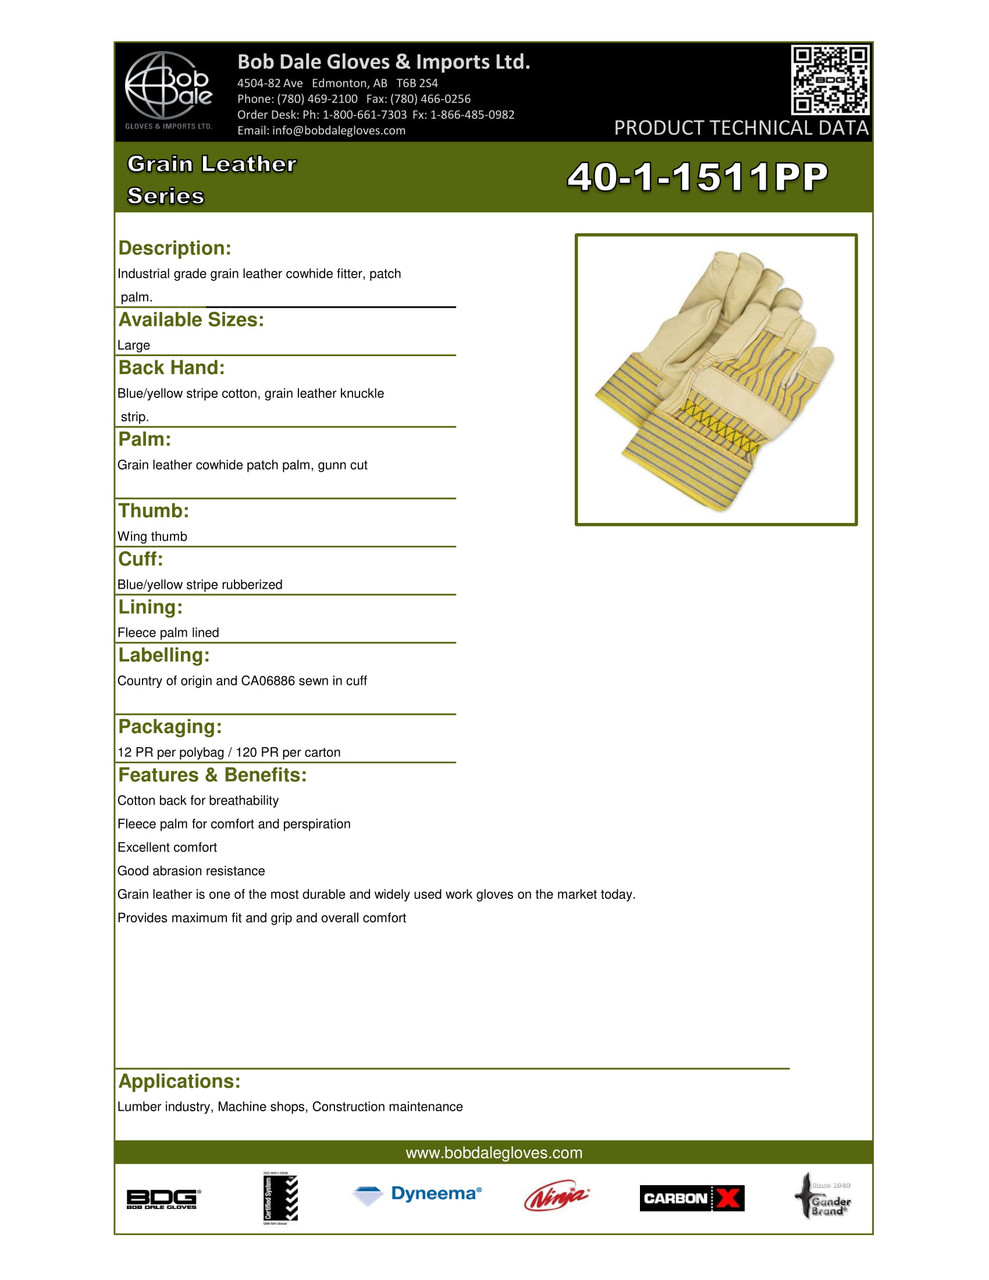 Grain Cowhide Canvasback Fitter Fleece Lined Yellow/Blue Stripe Patch Palm  40-1-1511PP